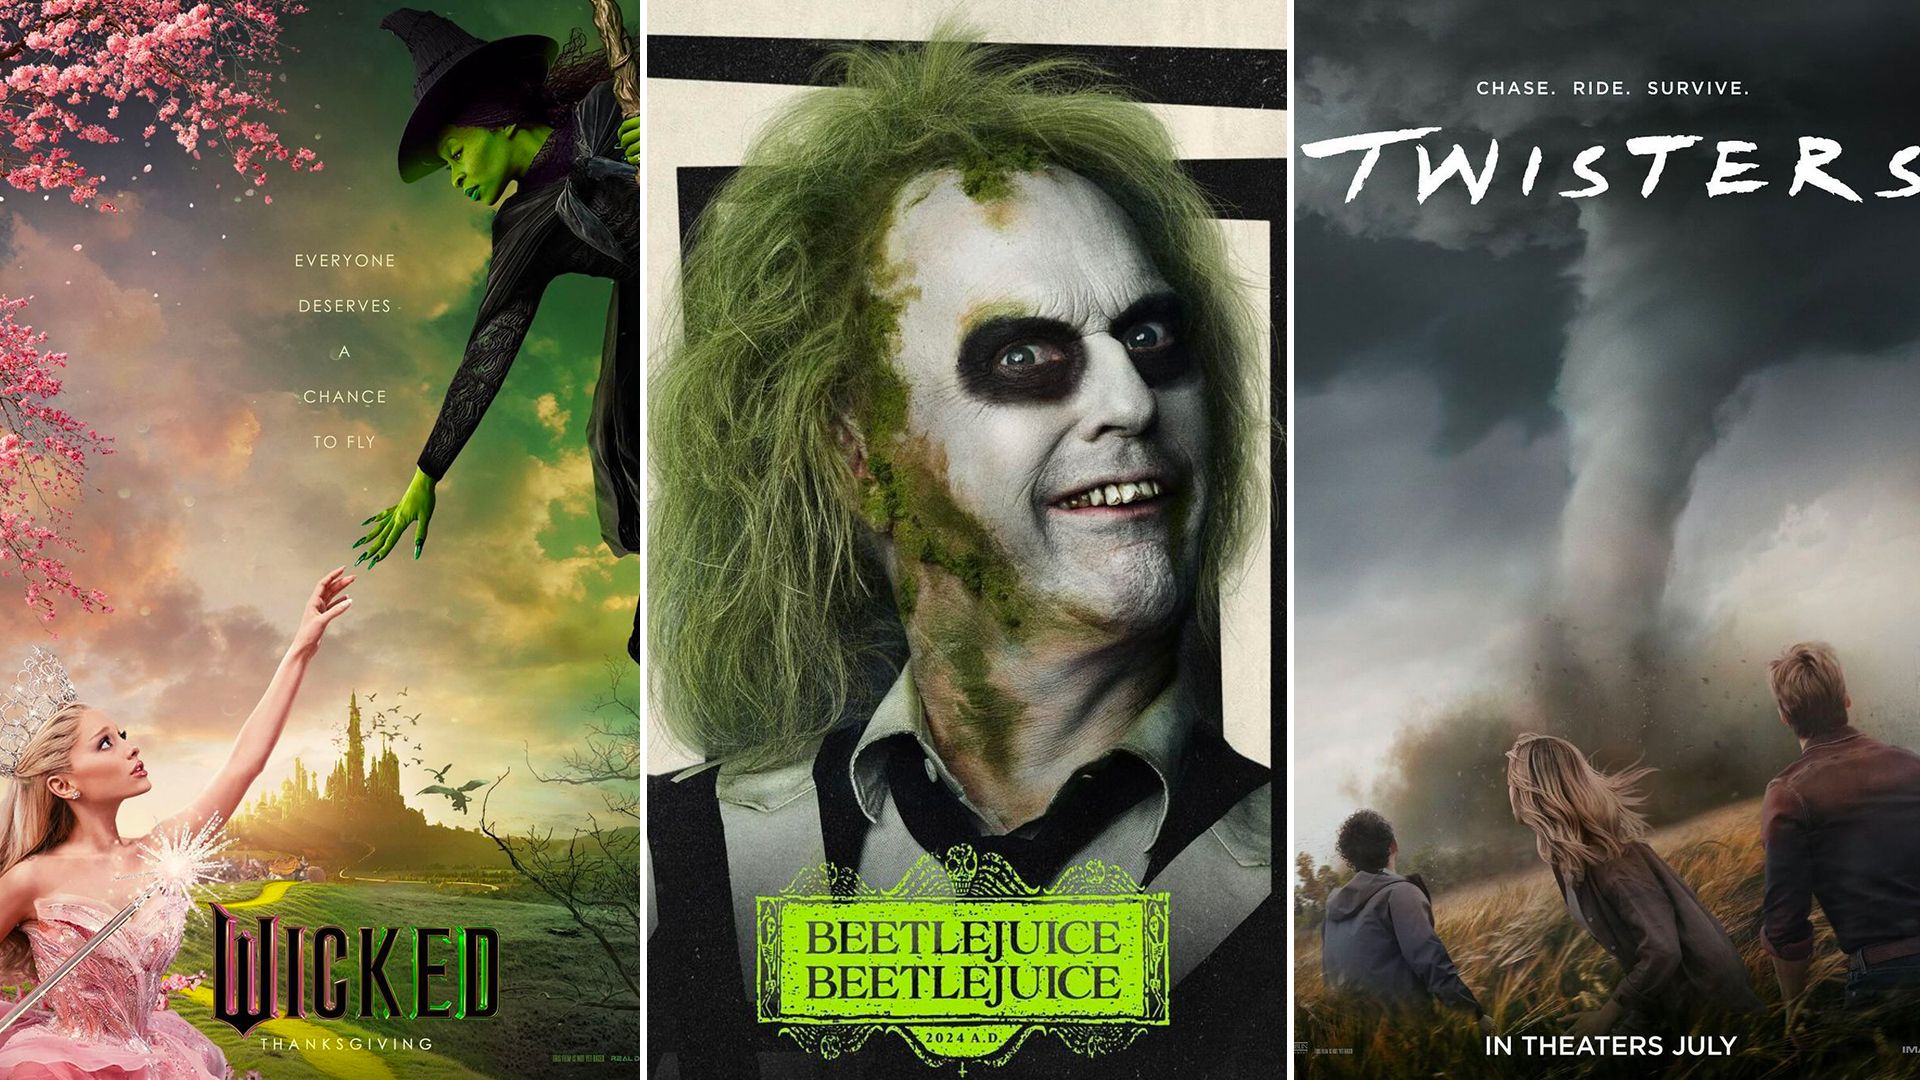 Movie posters for Wicked, Beetlejuice Beetlejuice and Twisters